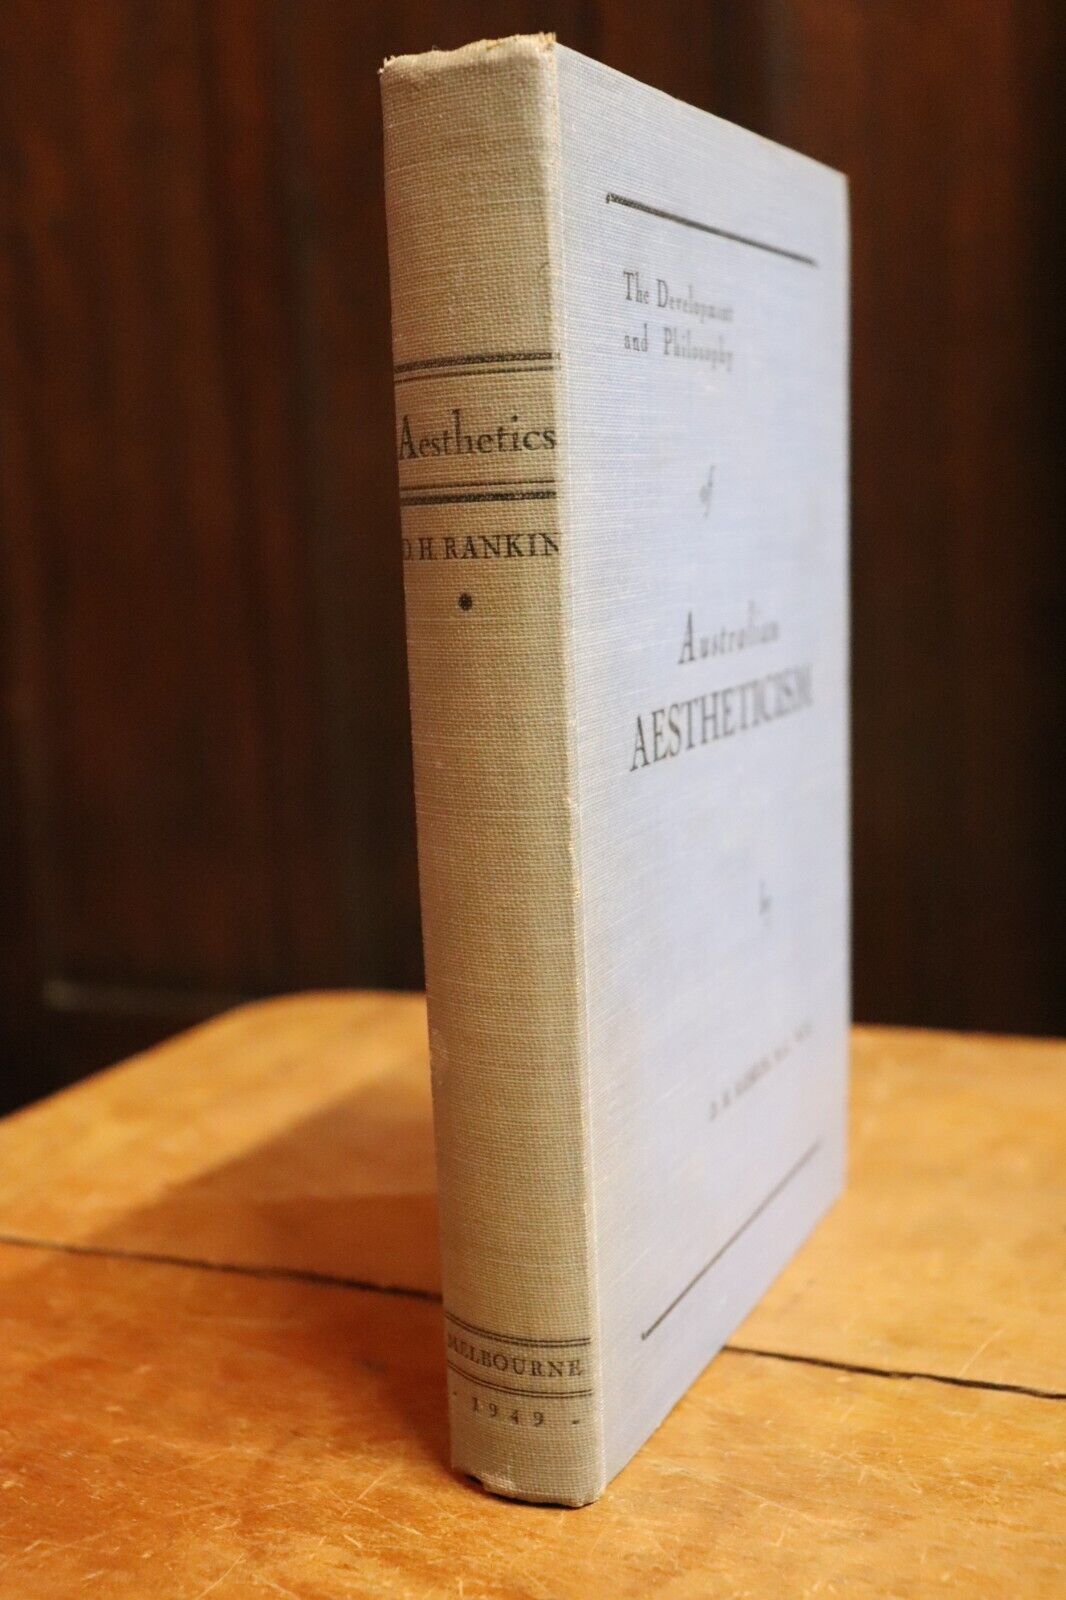 1949 Australian Aestheticism by DH Rankin Scarce 1st Edition Australian Art Book